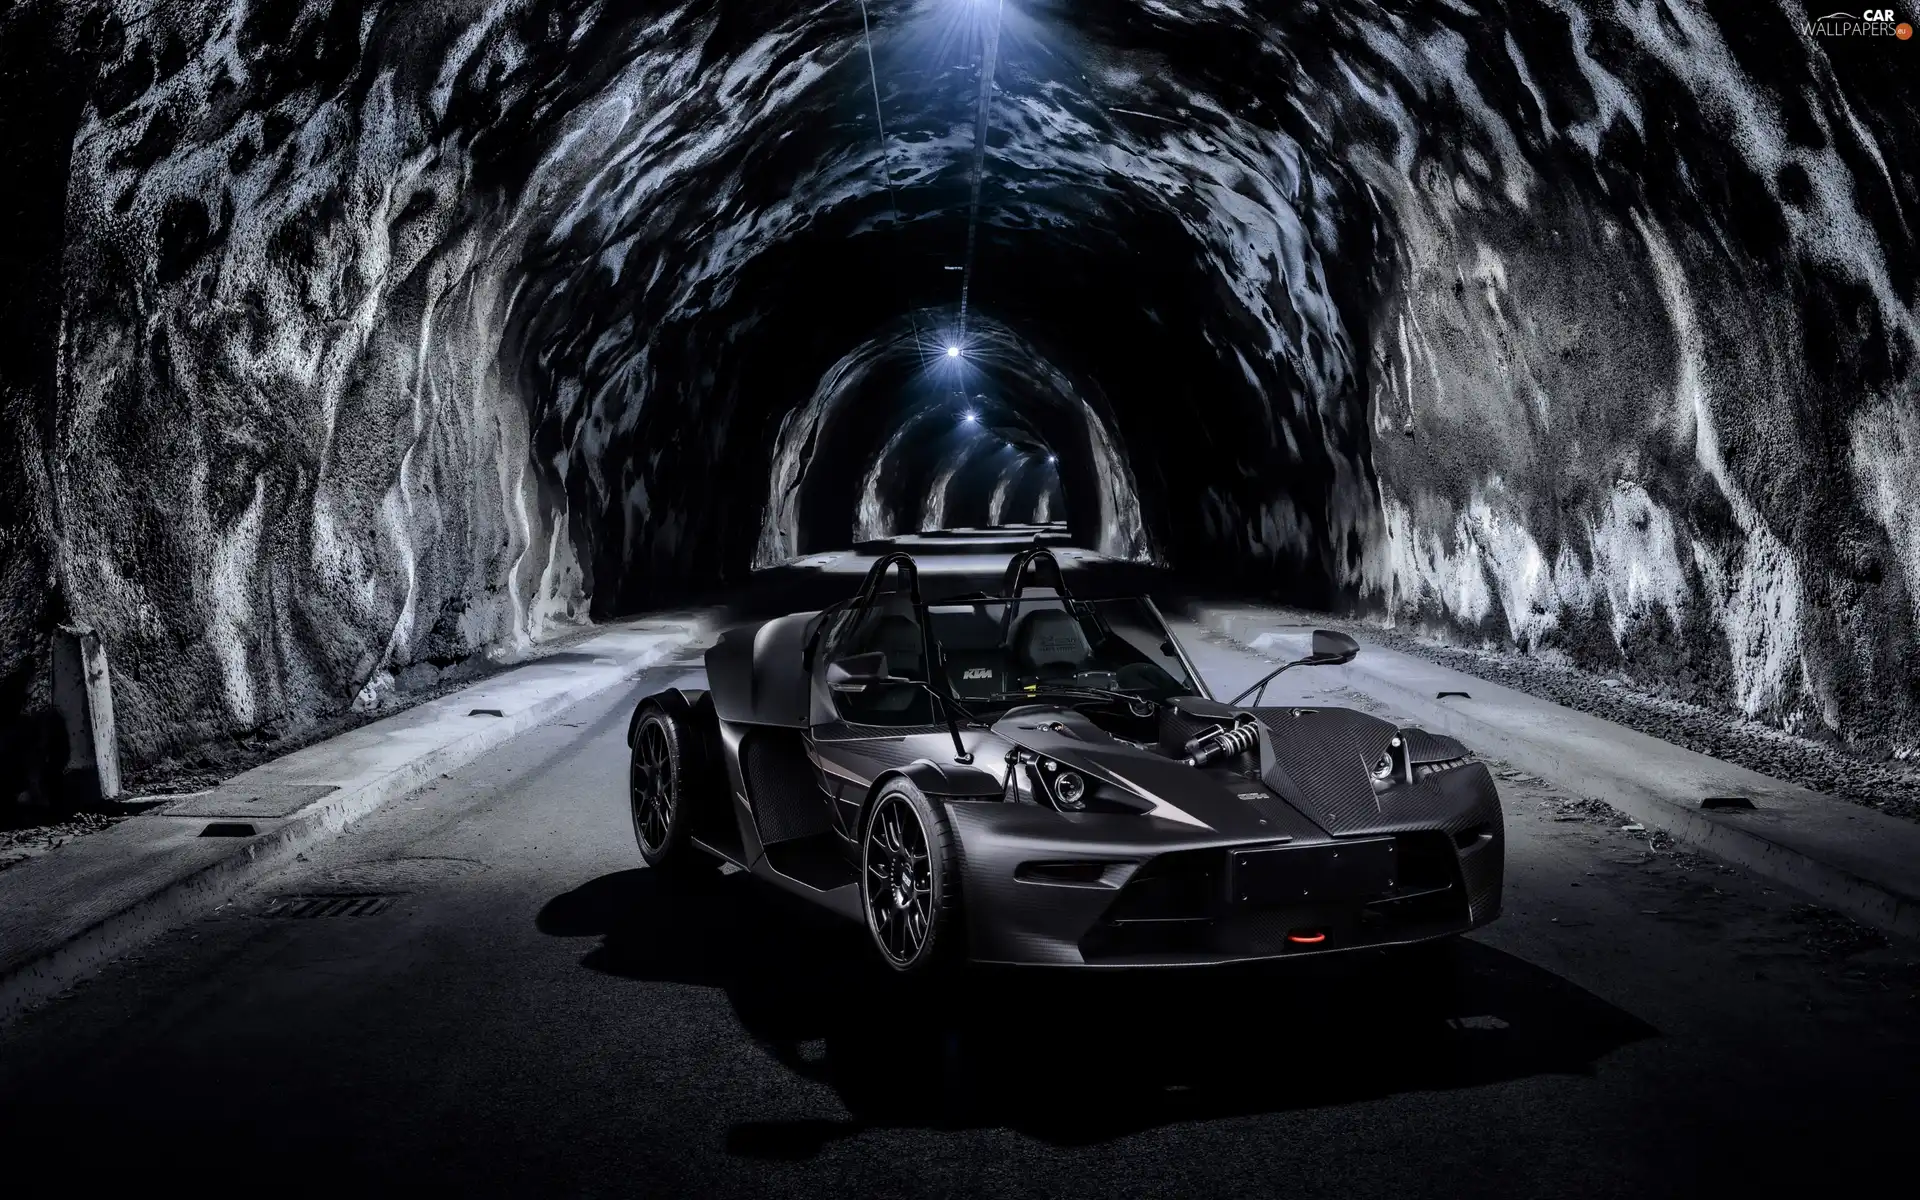 tunnel, Black, KTM X-Bow